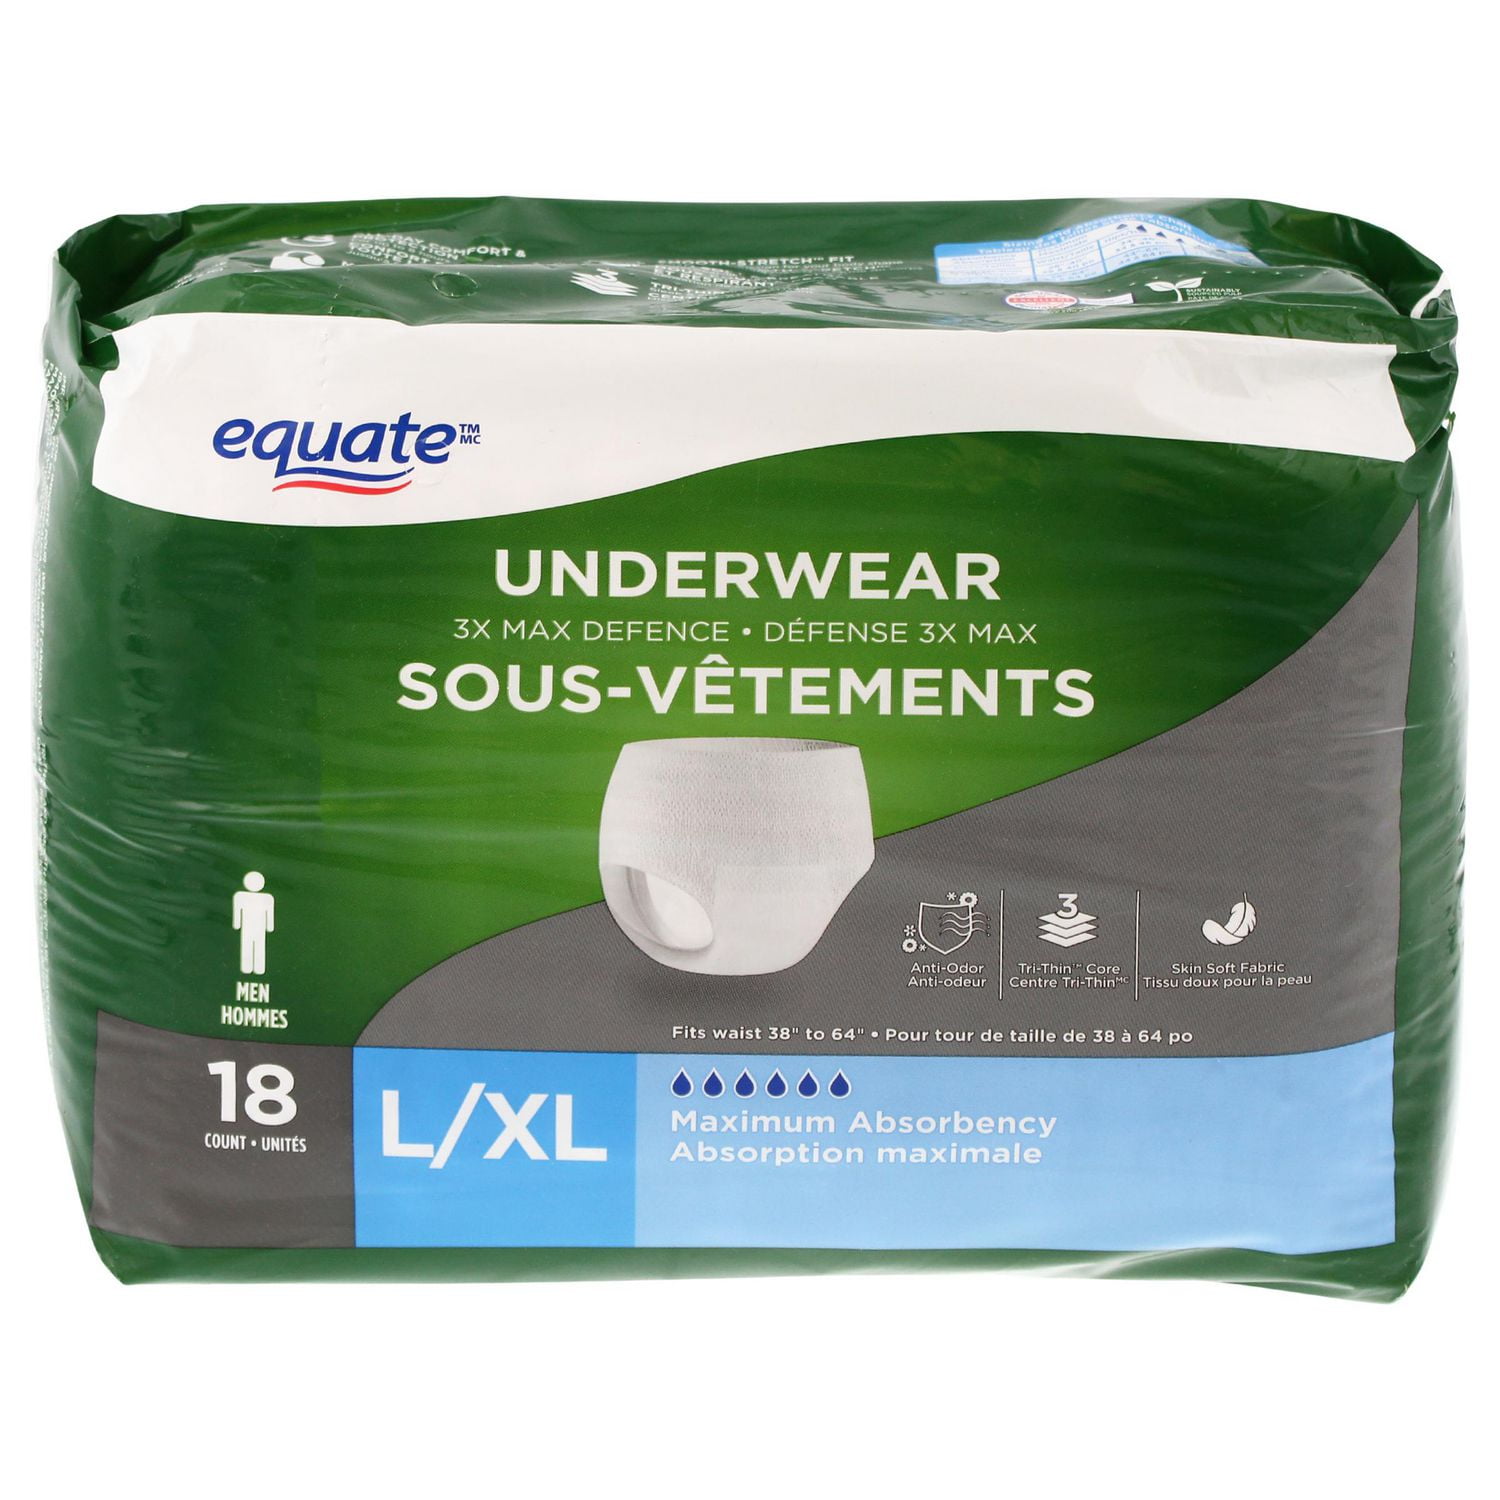 Post Surgery Underwear Men's Tearaway Underwear 